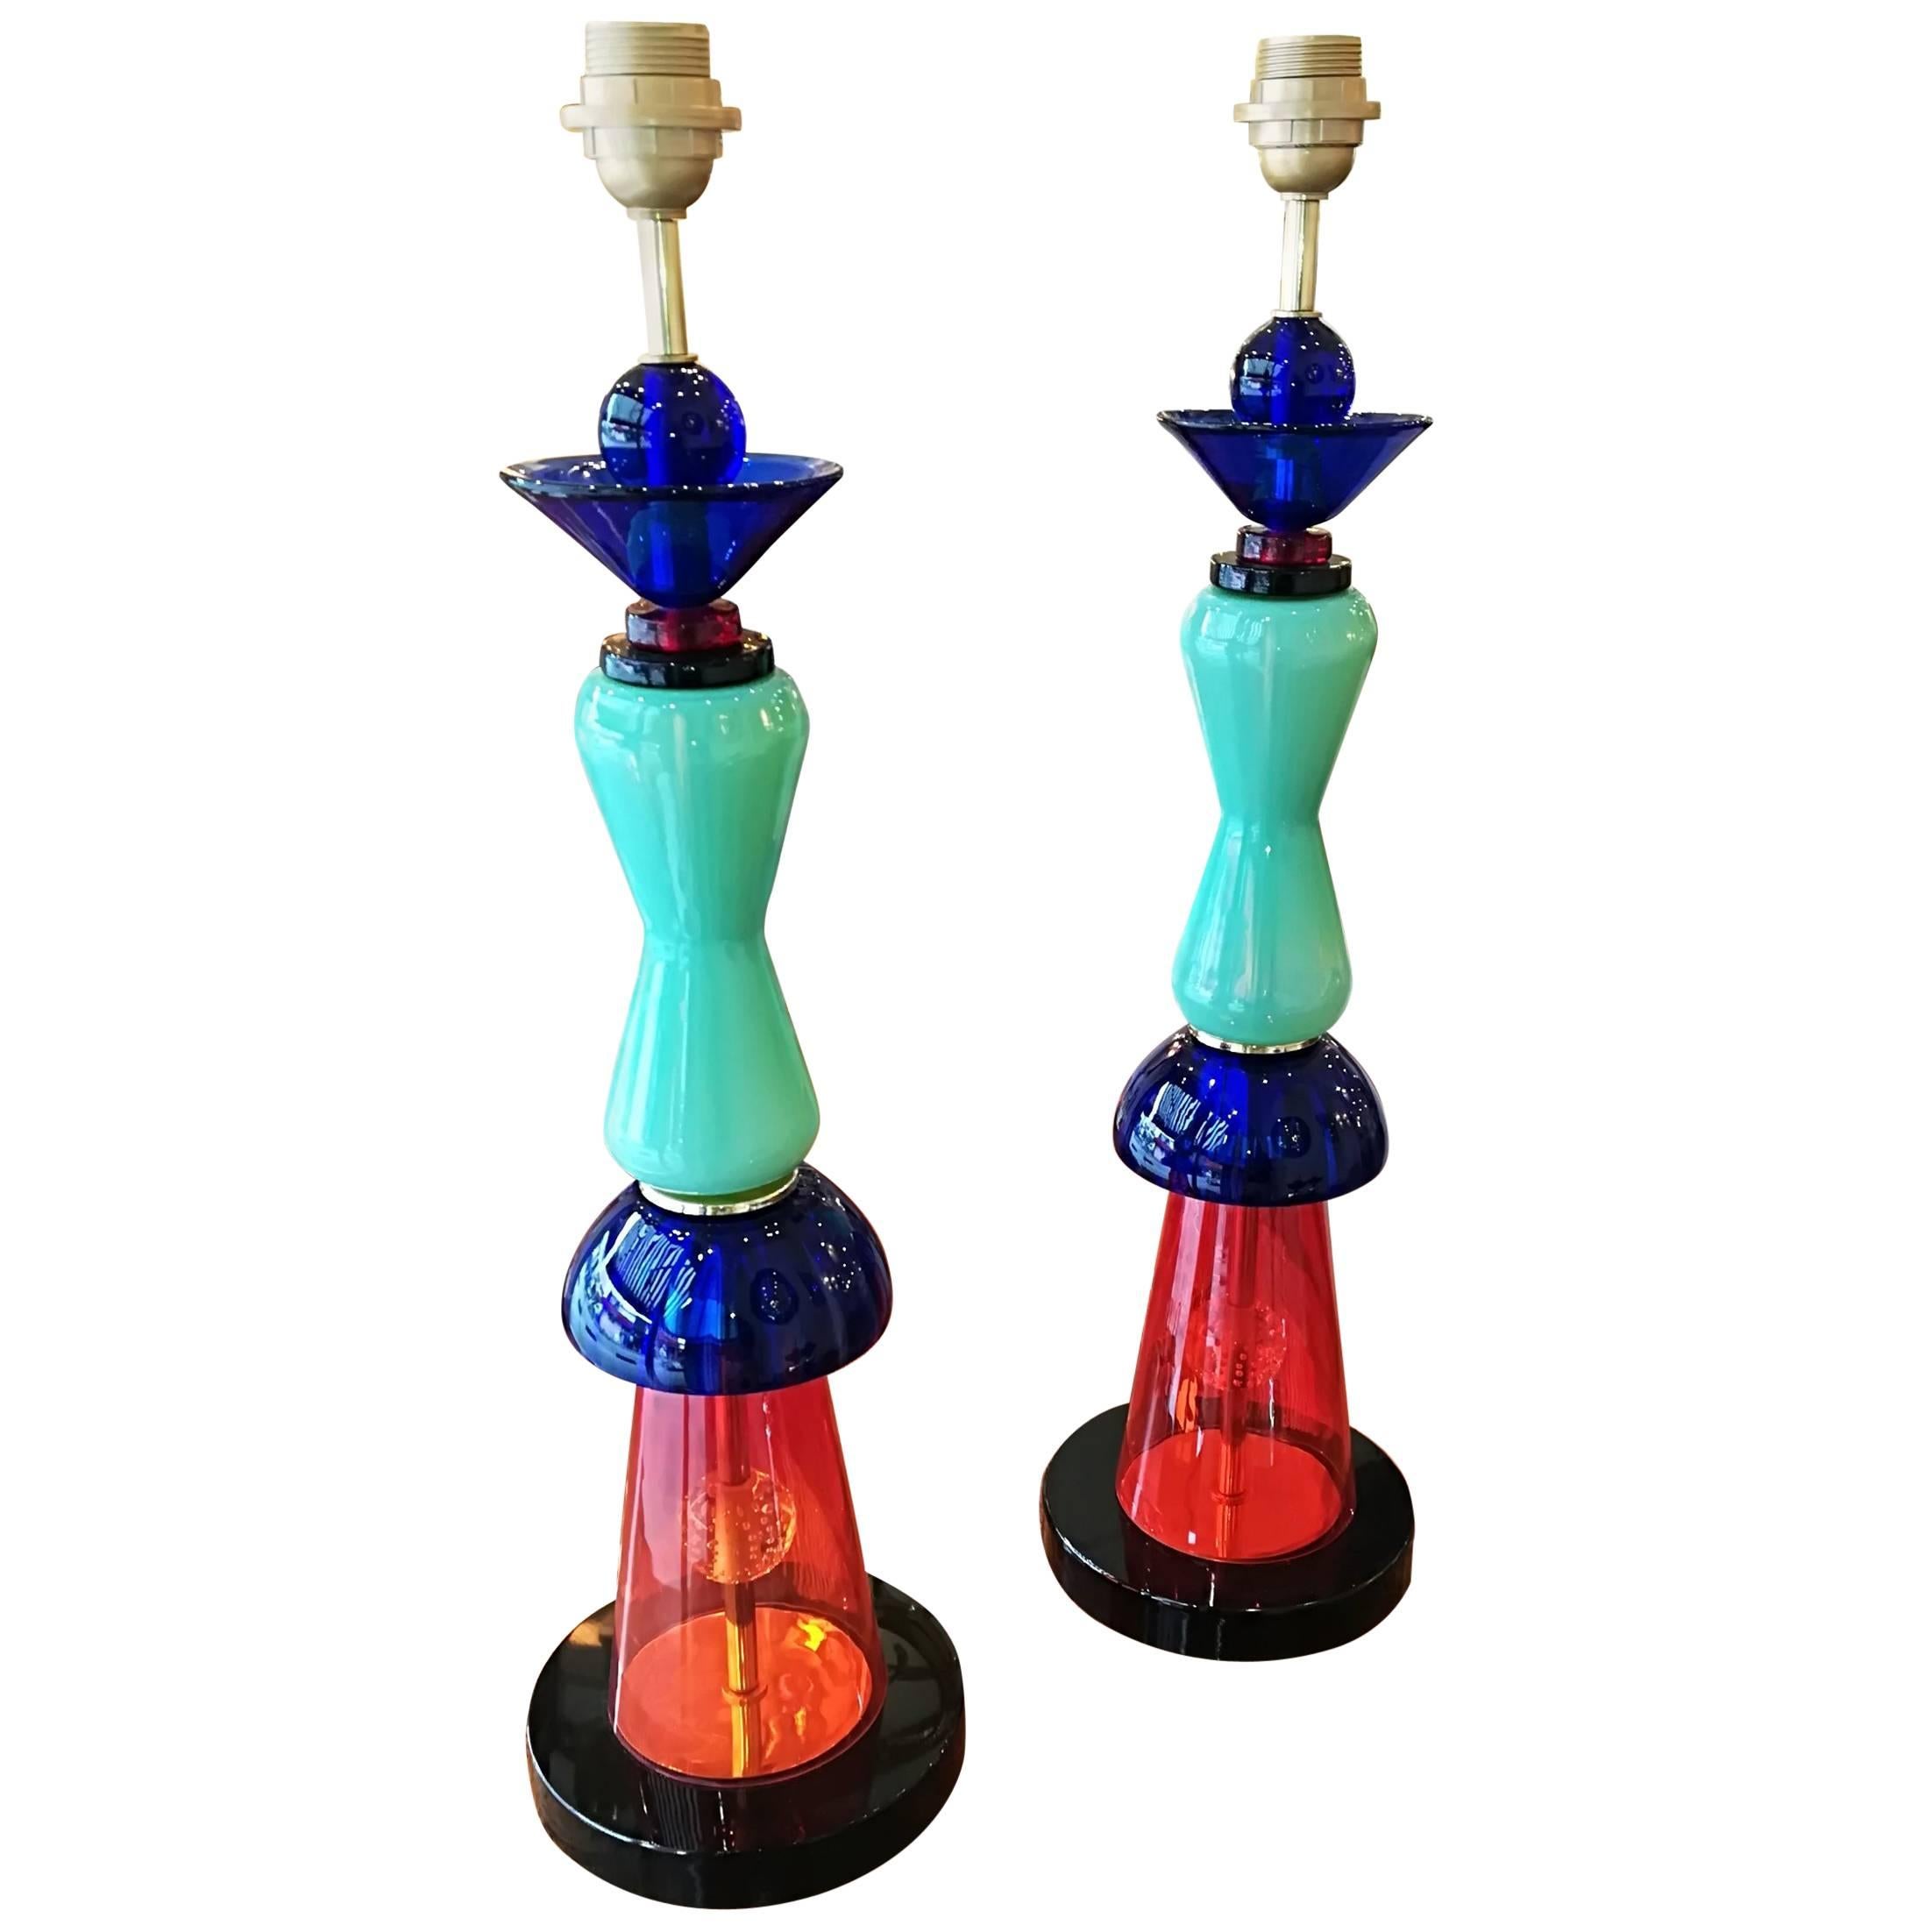 Pair of Italian Table Lamps in Handblown Murano Glass